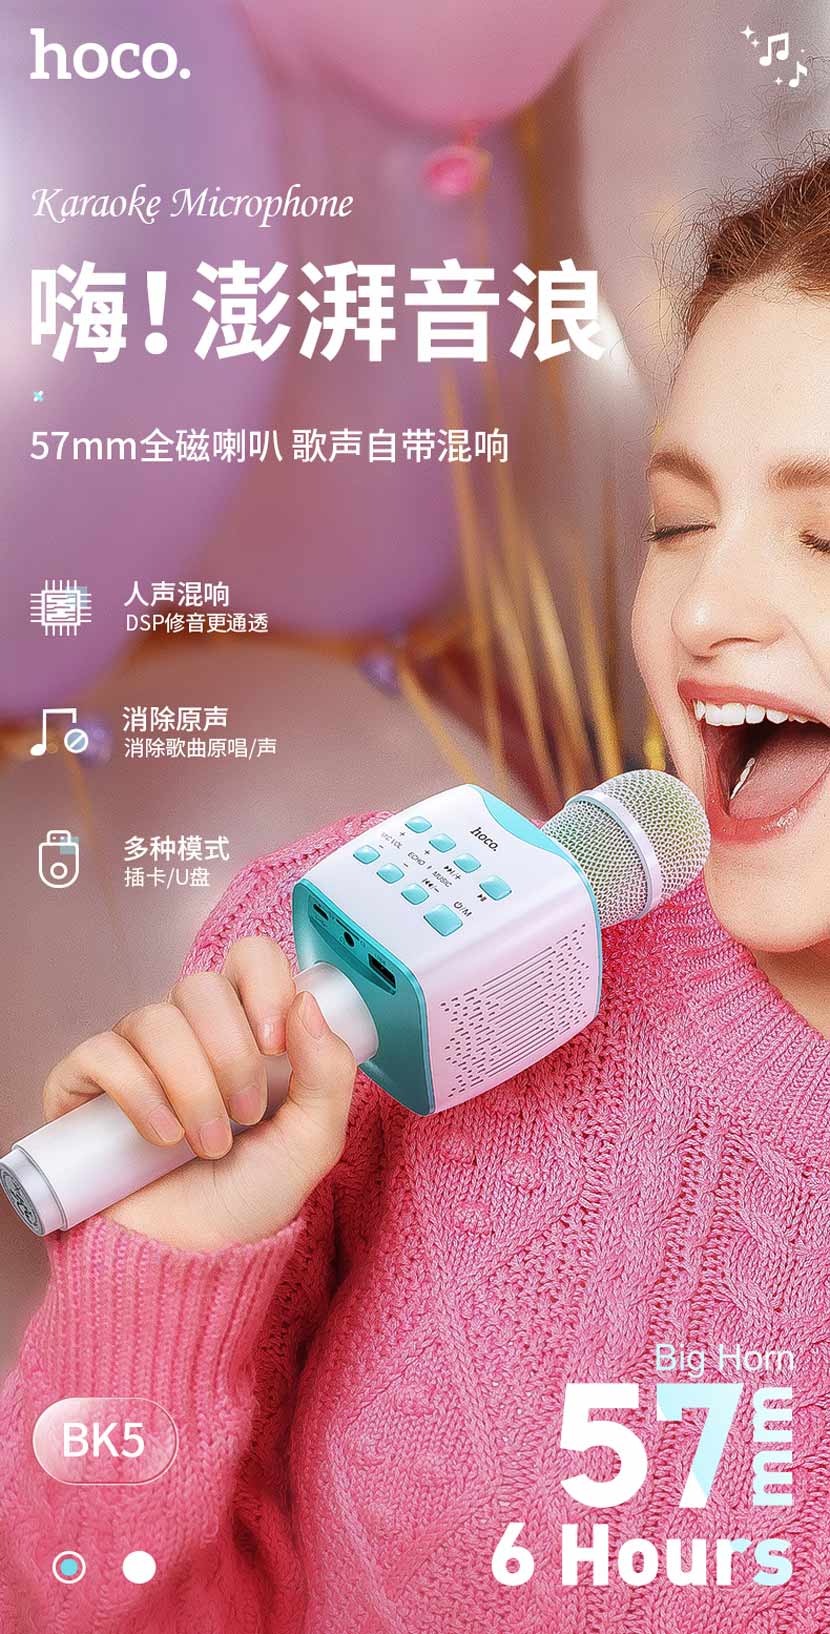 hoco news bk5 cantando karaoke microphone cn